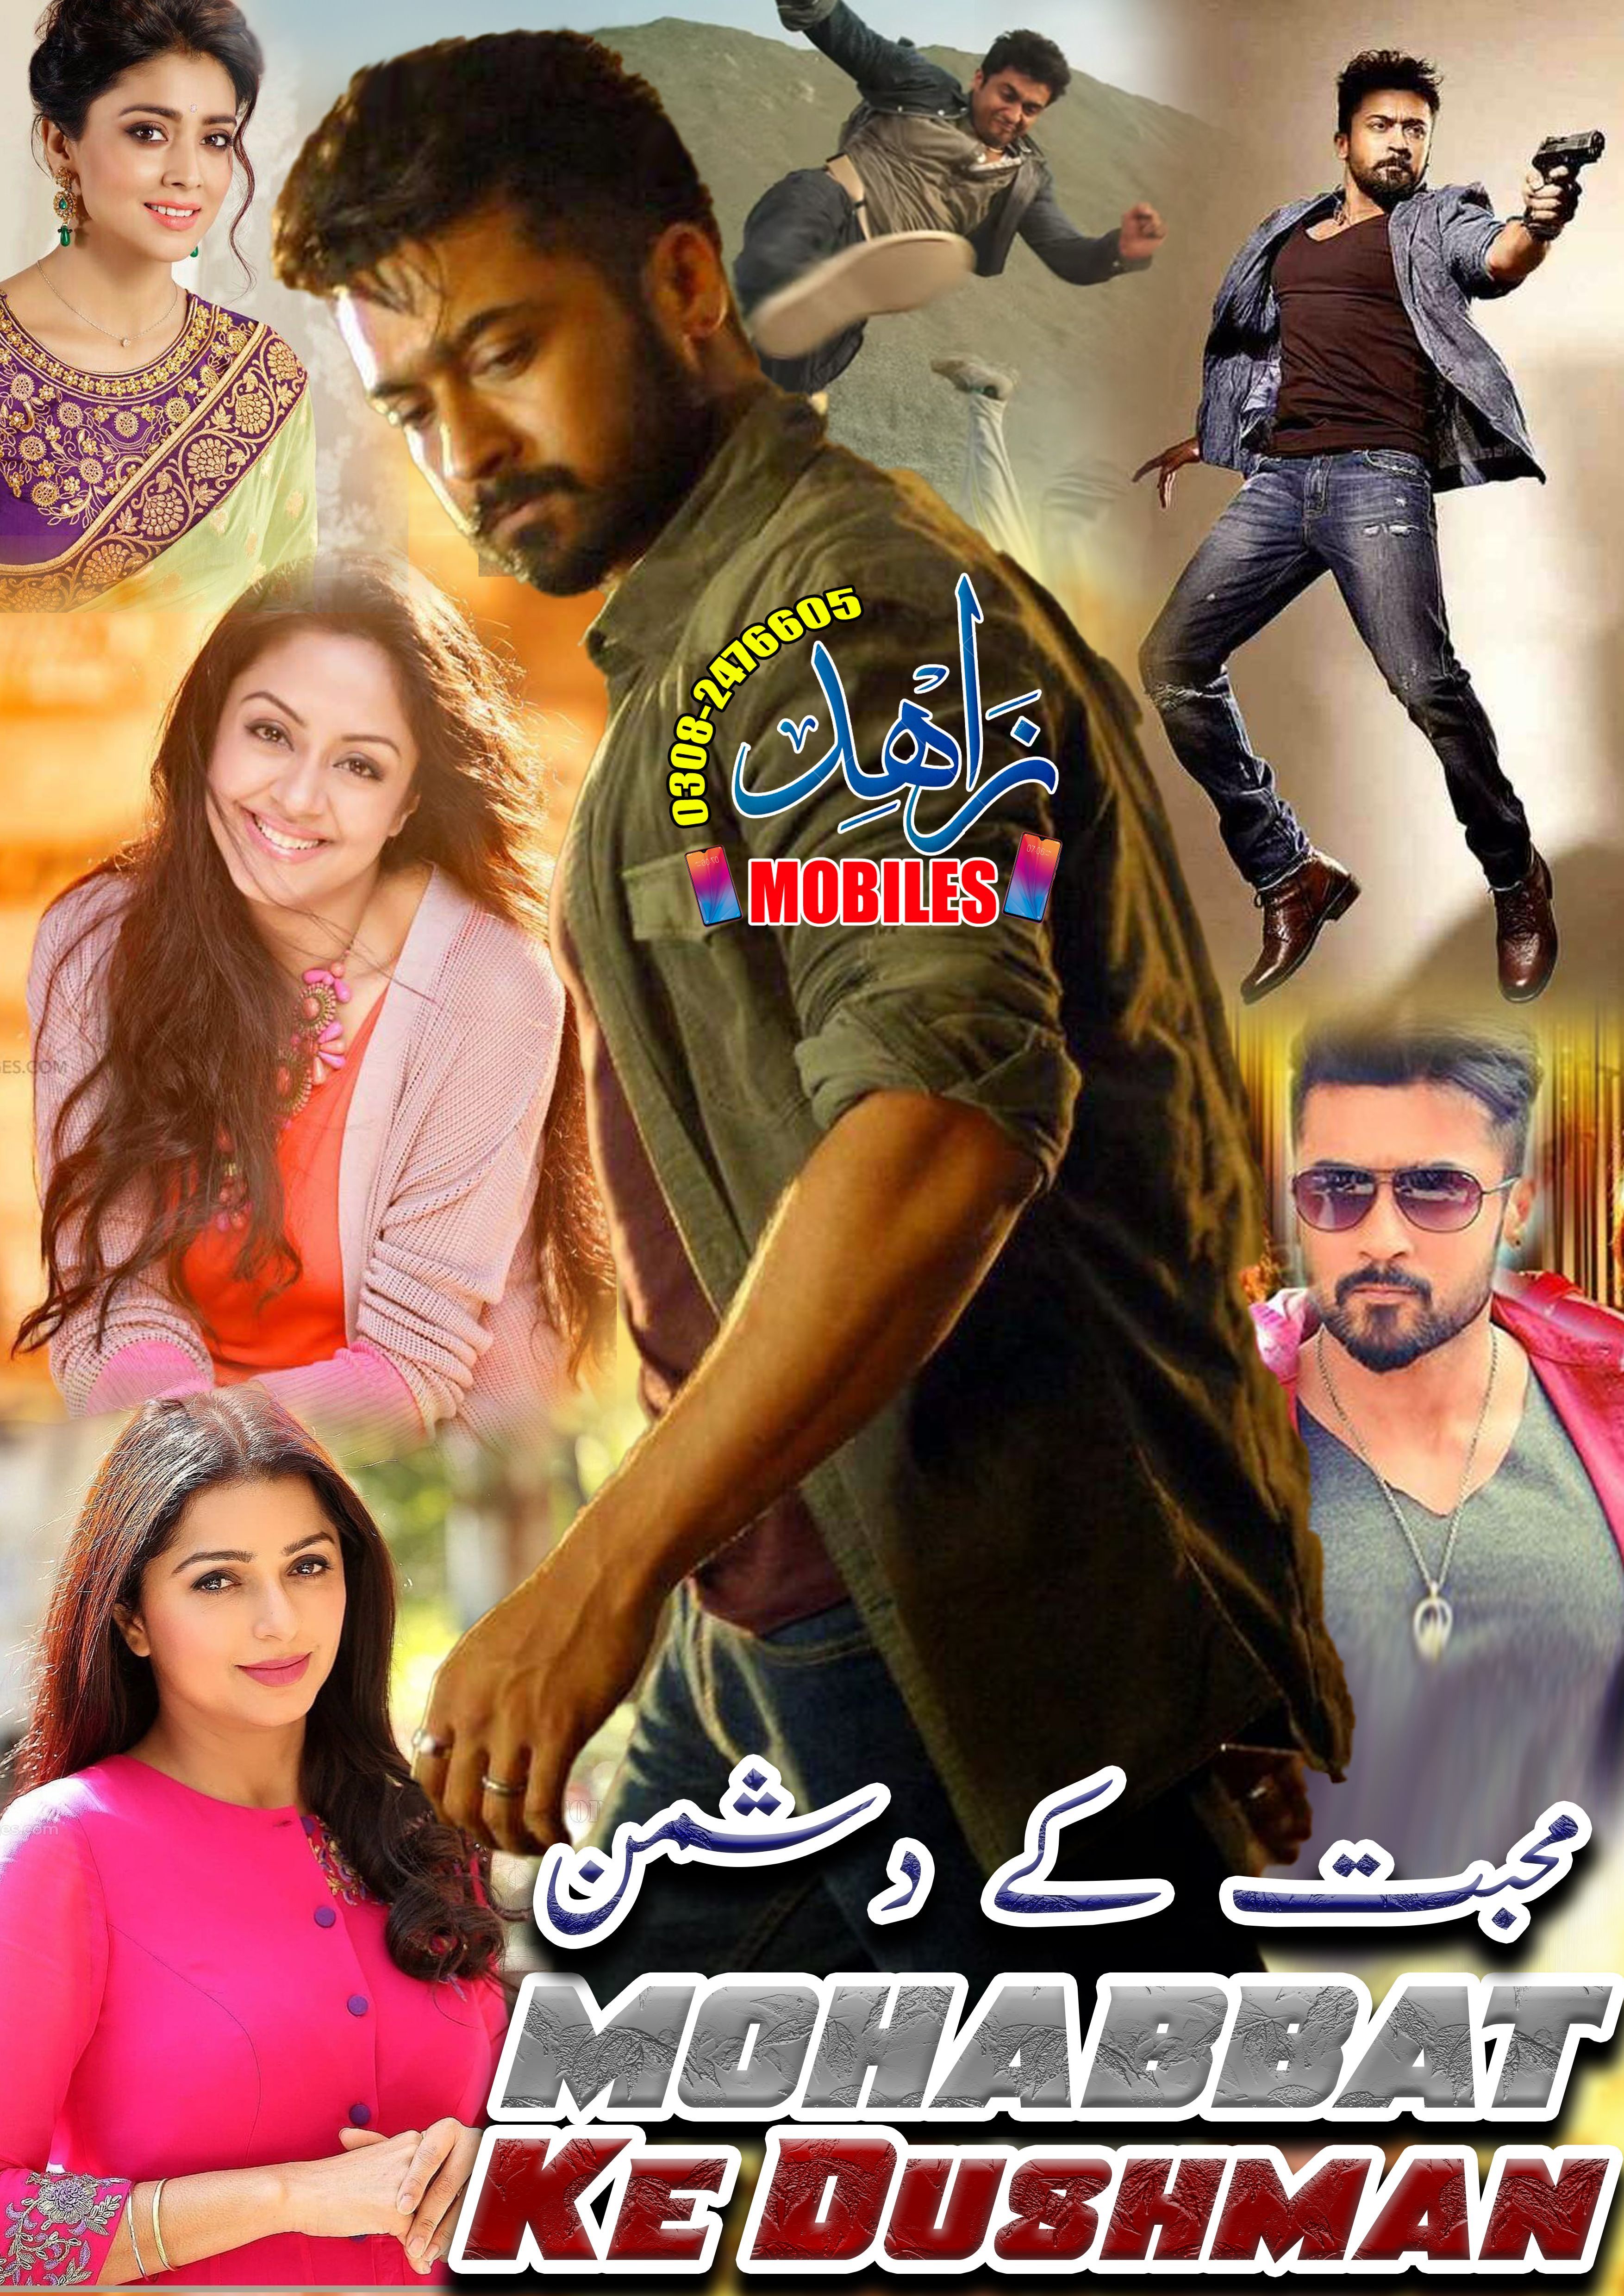 Mohabbat Ke Dushman (2017) South Indian Movie Poster Edit By Zahid Mobiles. Movie posters, Indian movies, Movies